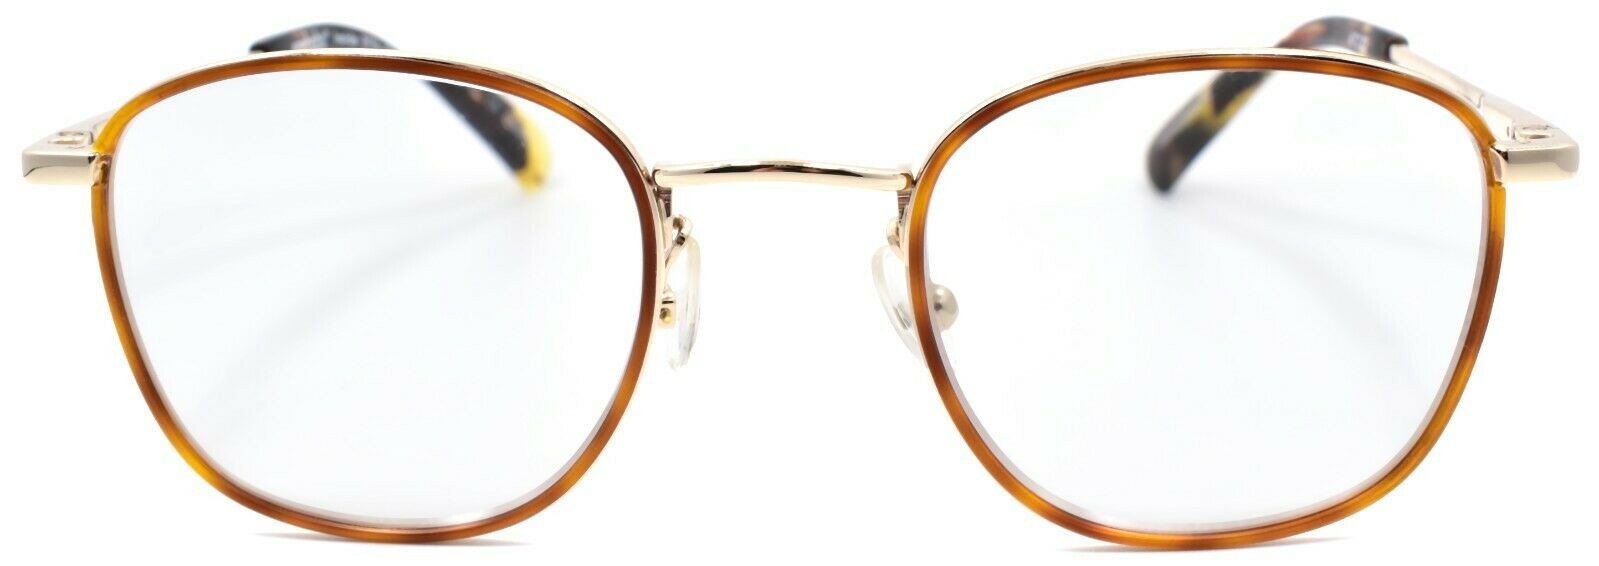 2-Eyebobs Inside 3174 06 Unisex Reading Glasses Orange Tortoise / Gold +3.50-842754169653-IKSpecs